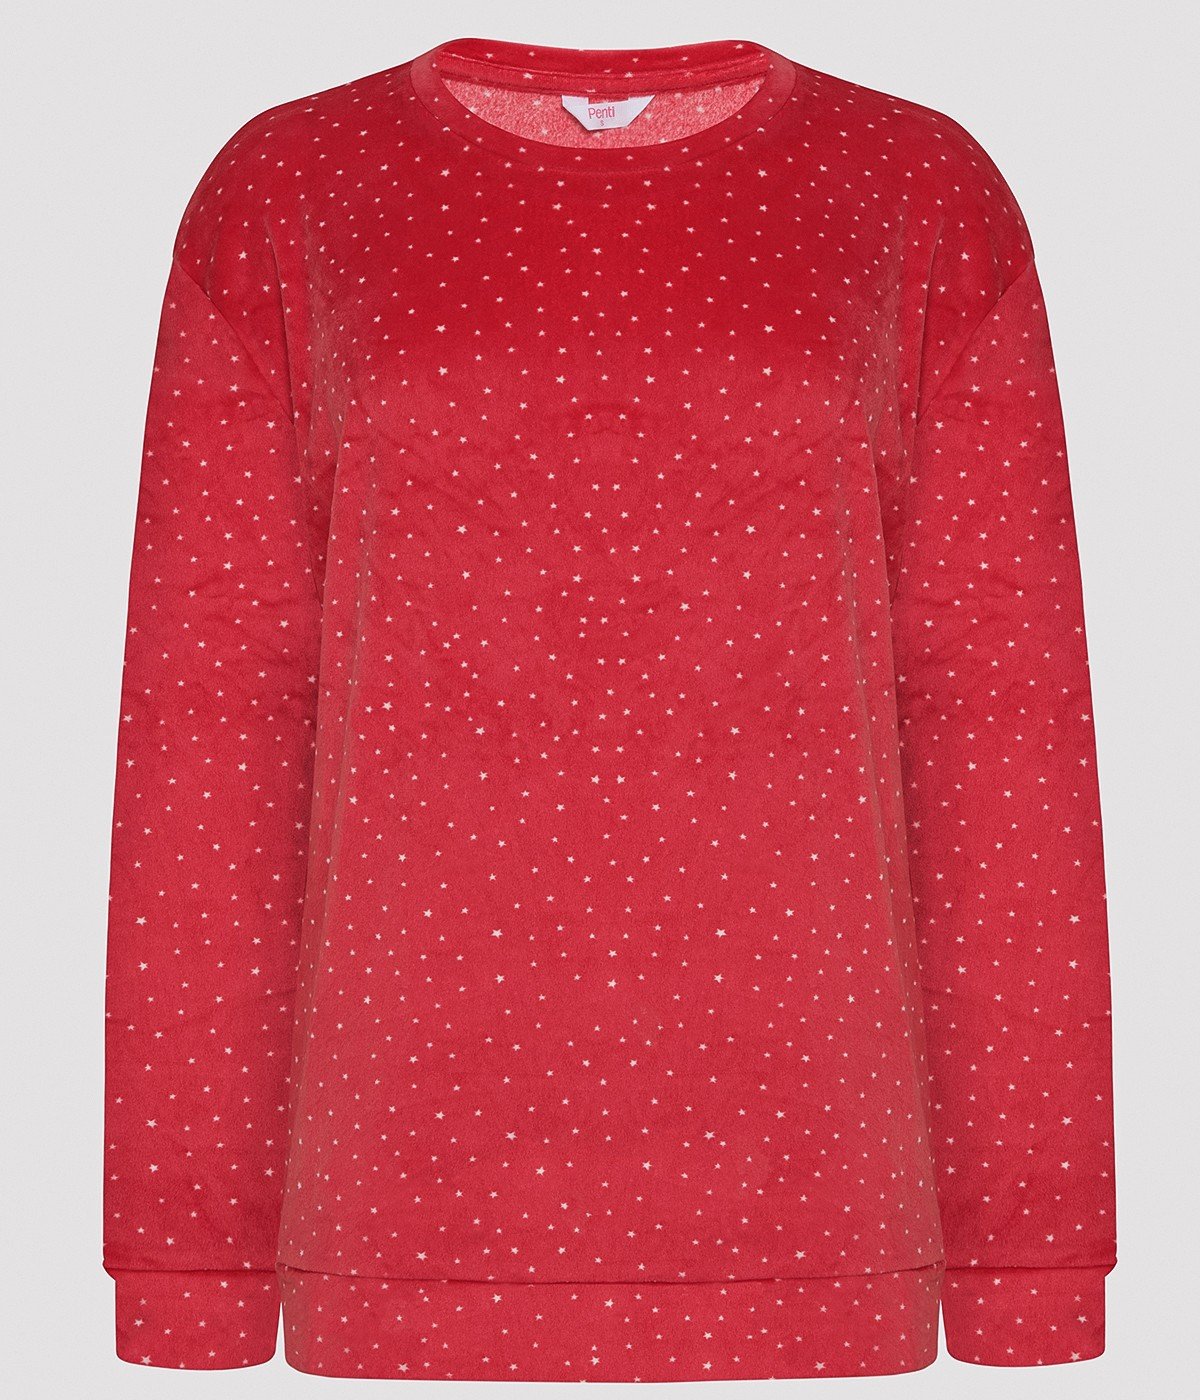 Hearts Red Fuzzy Sweatshirt PJ Top